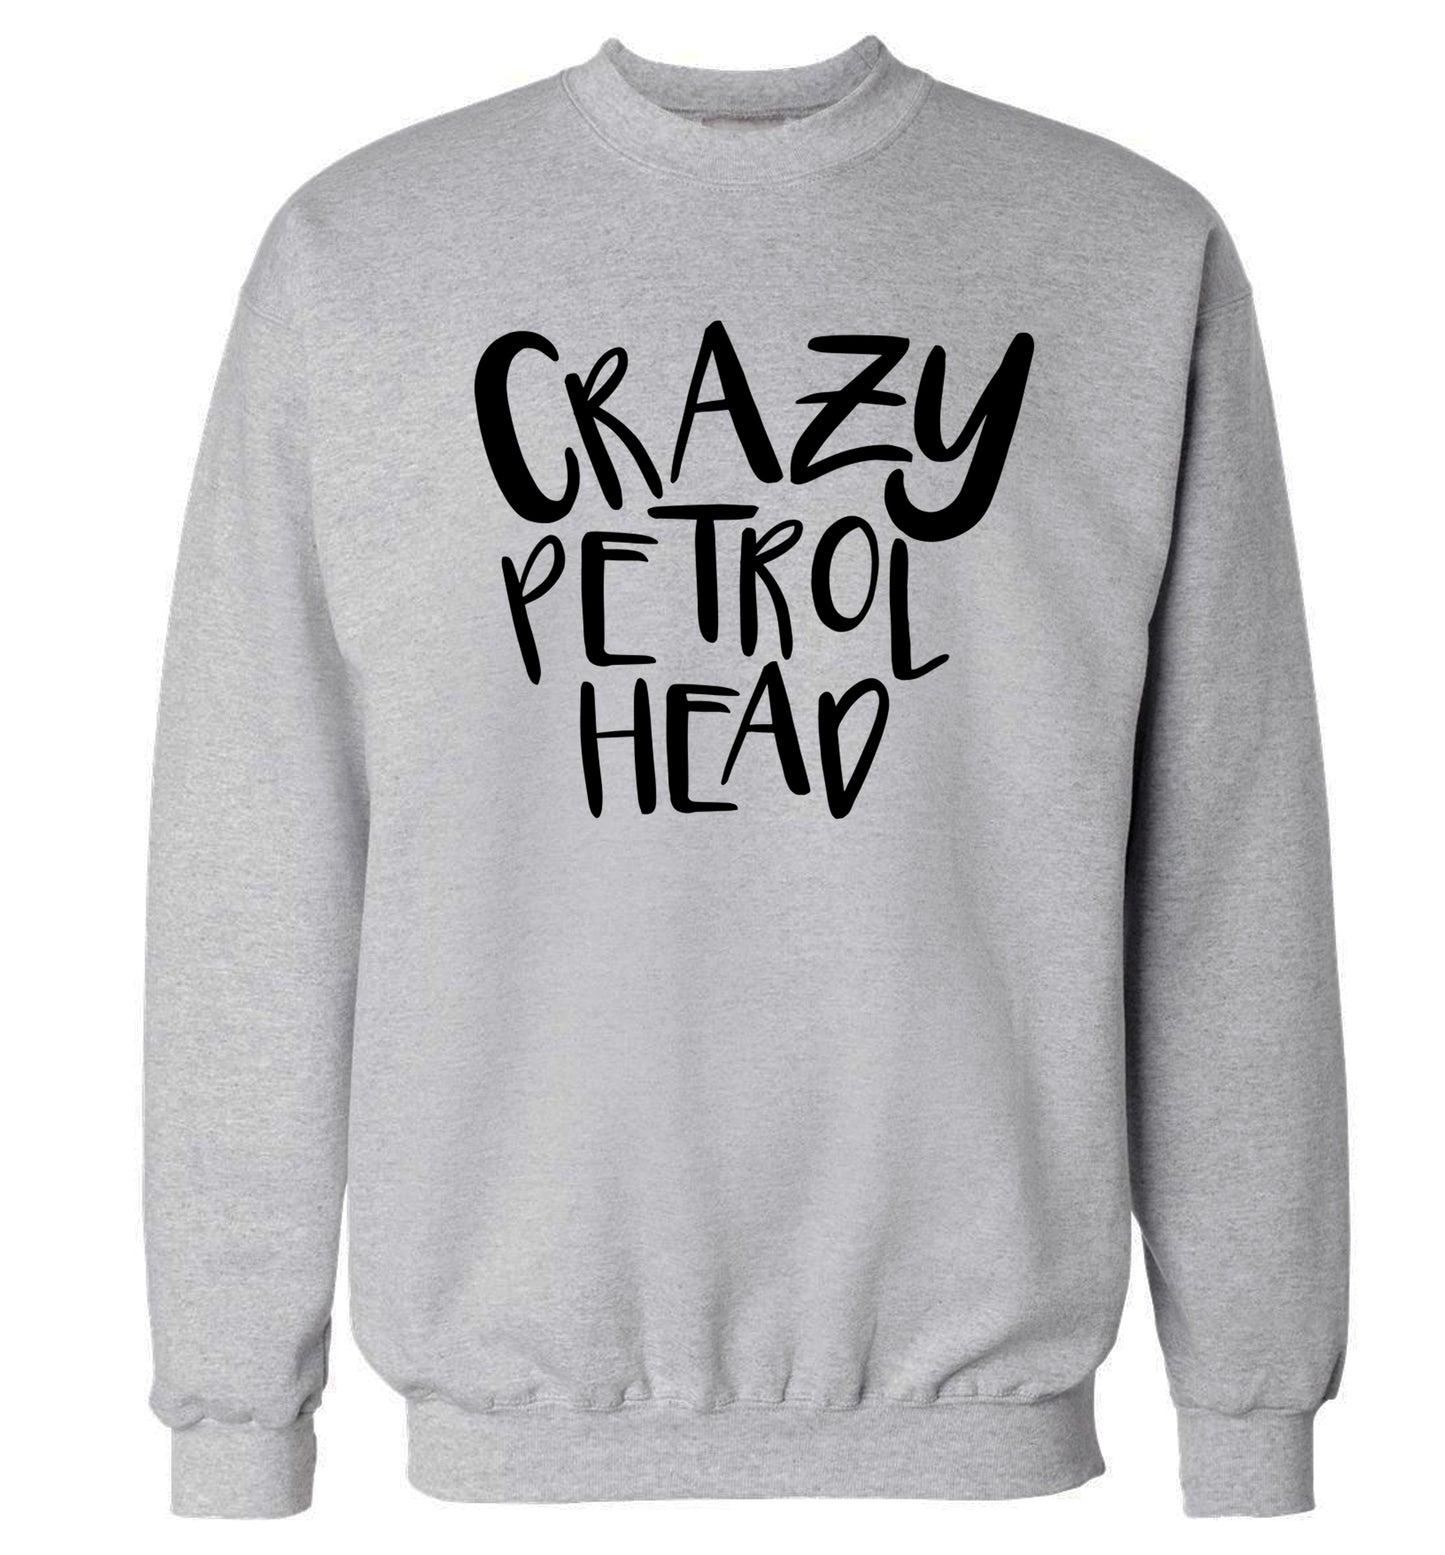 Crazy petrol head Adult's unisex grey Sweater 2XL